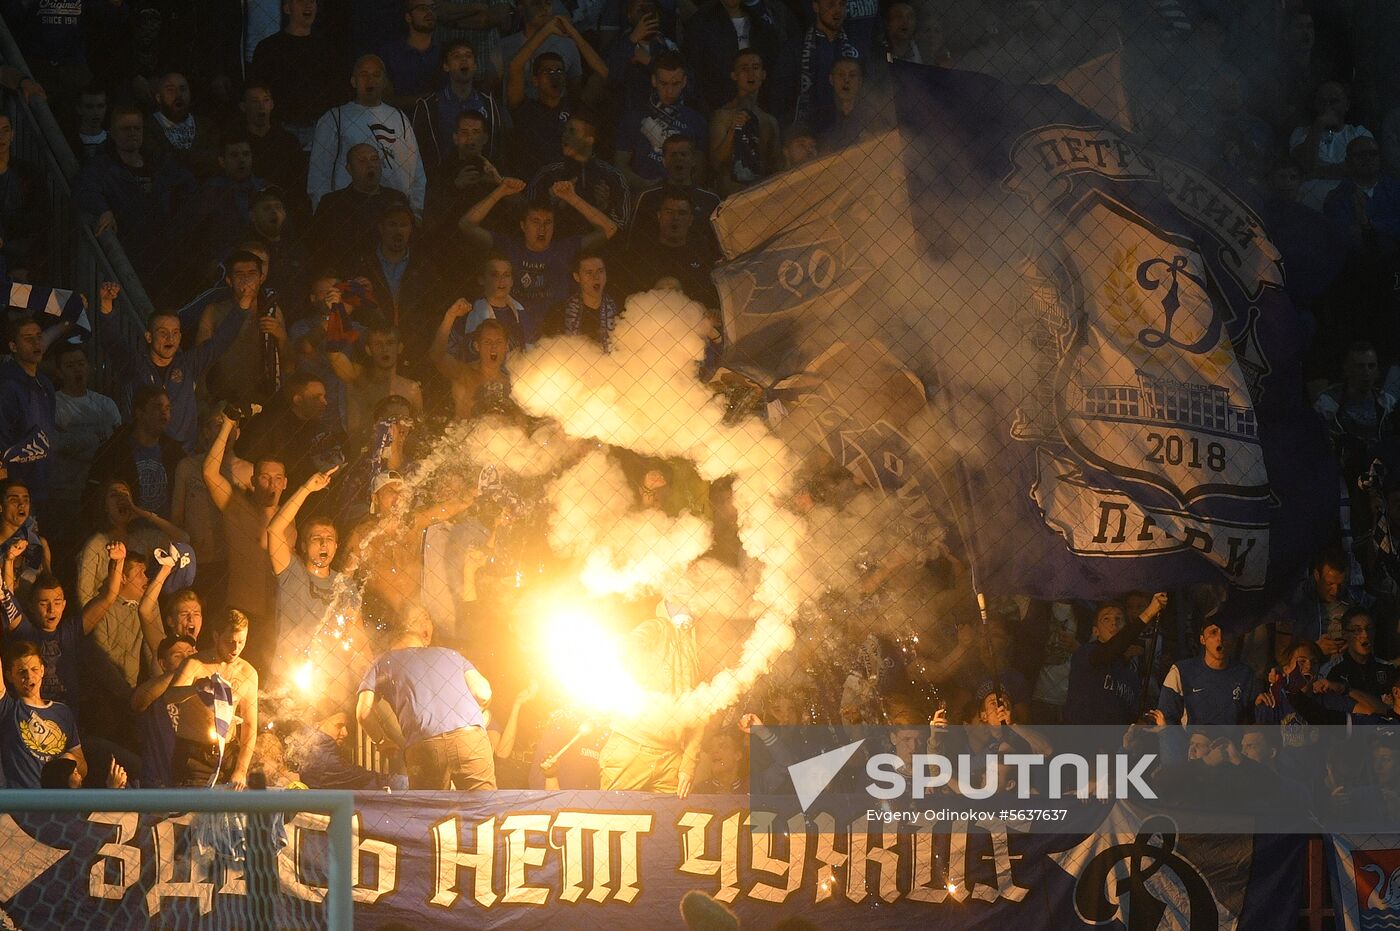 Russia Soccer Lokomotiv - Dynamo